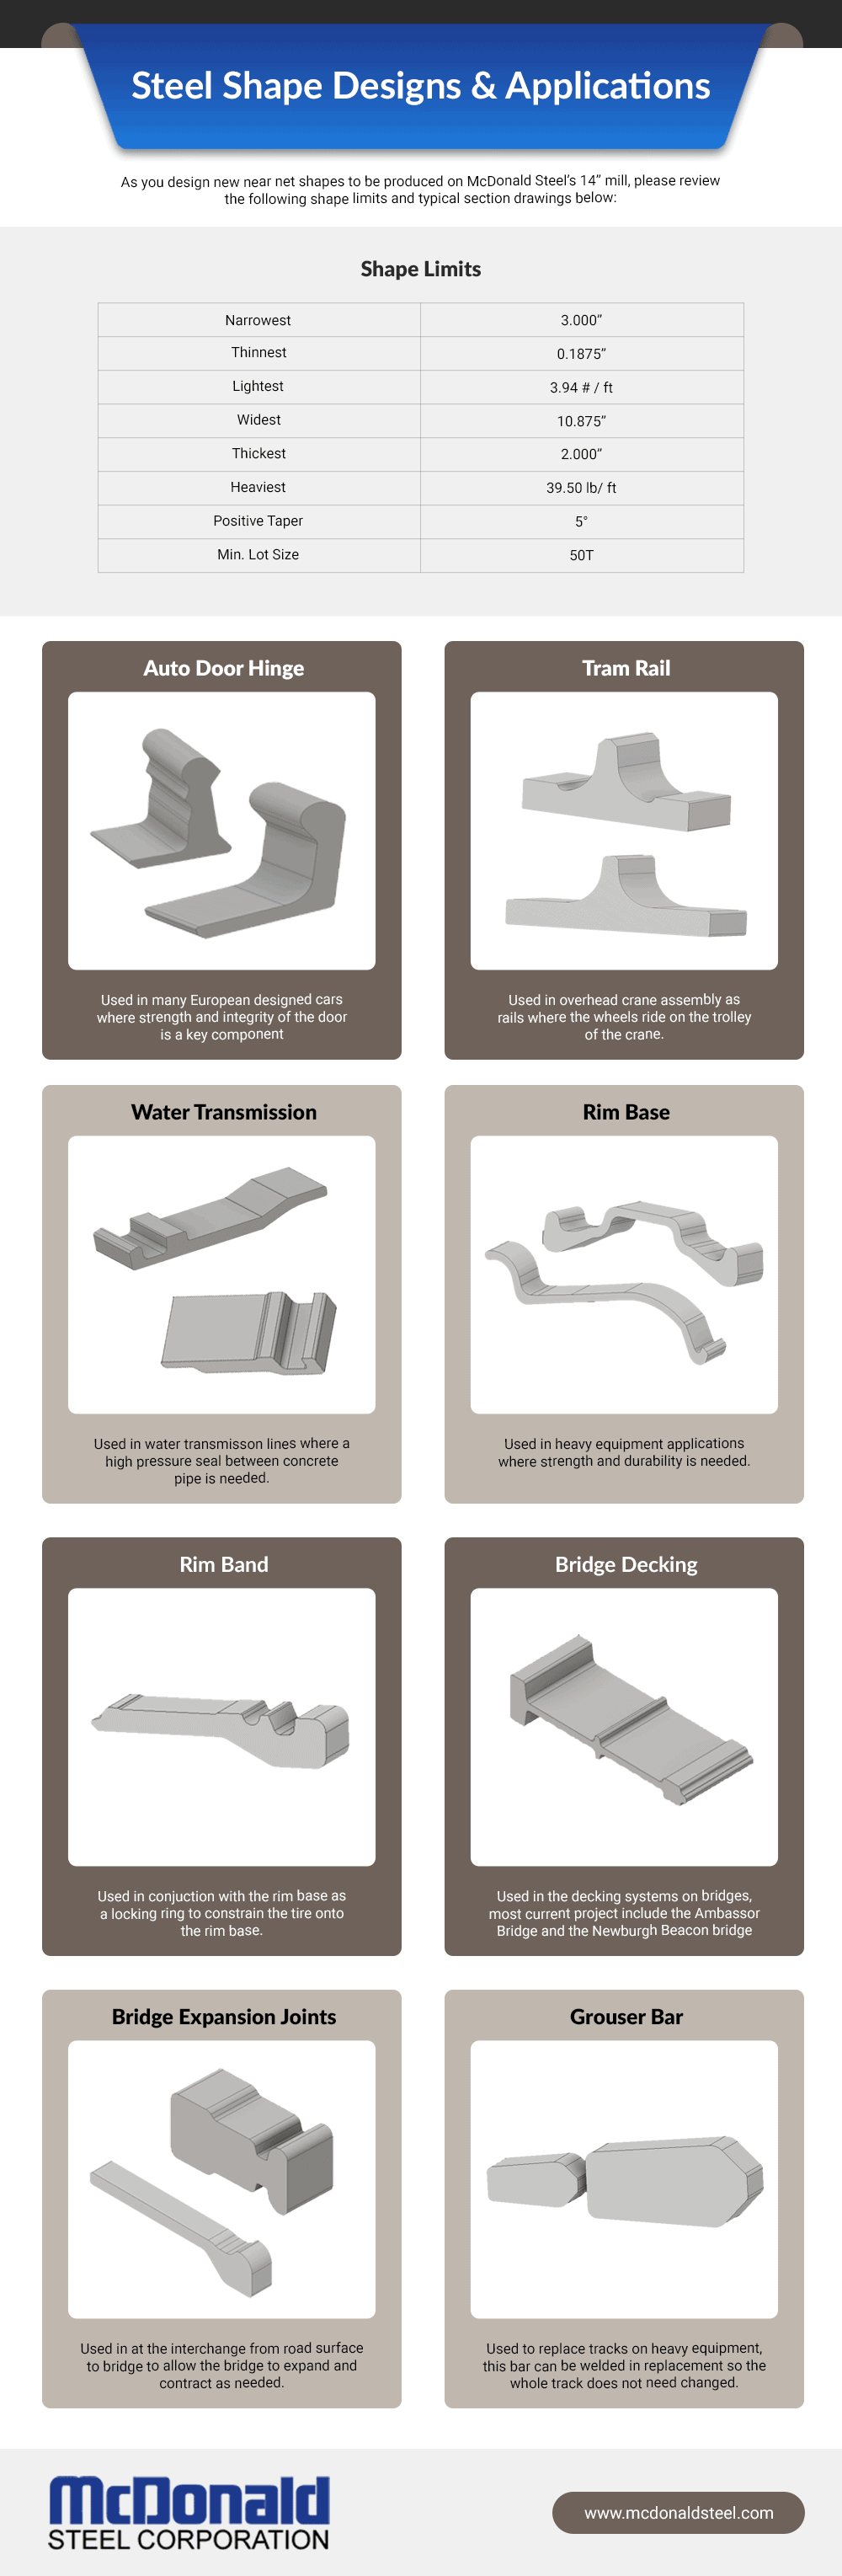 Steel Shape Designs applications